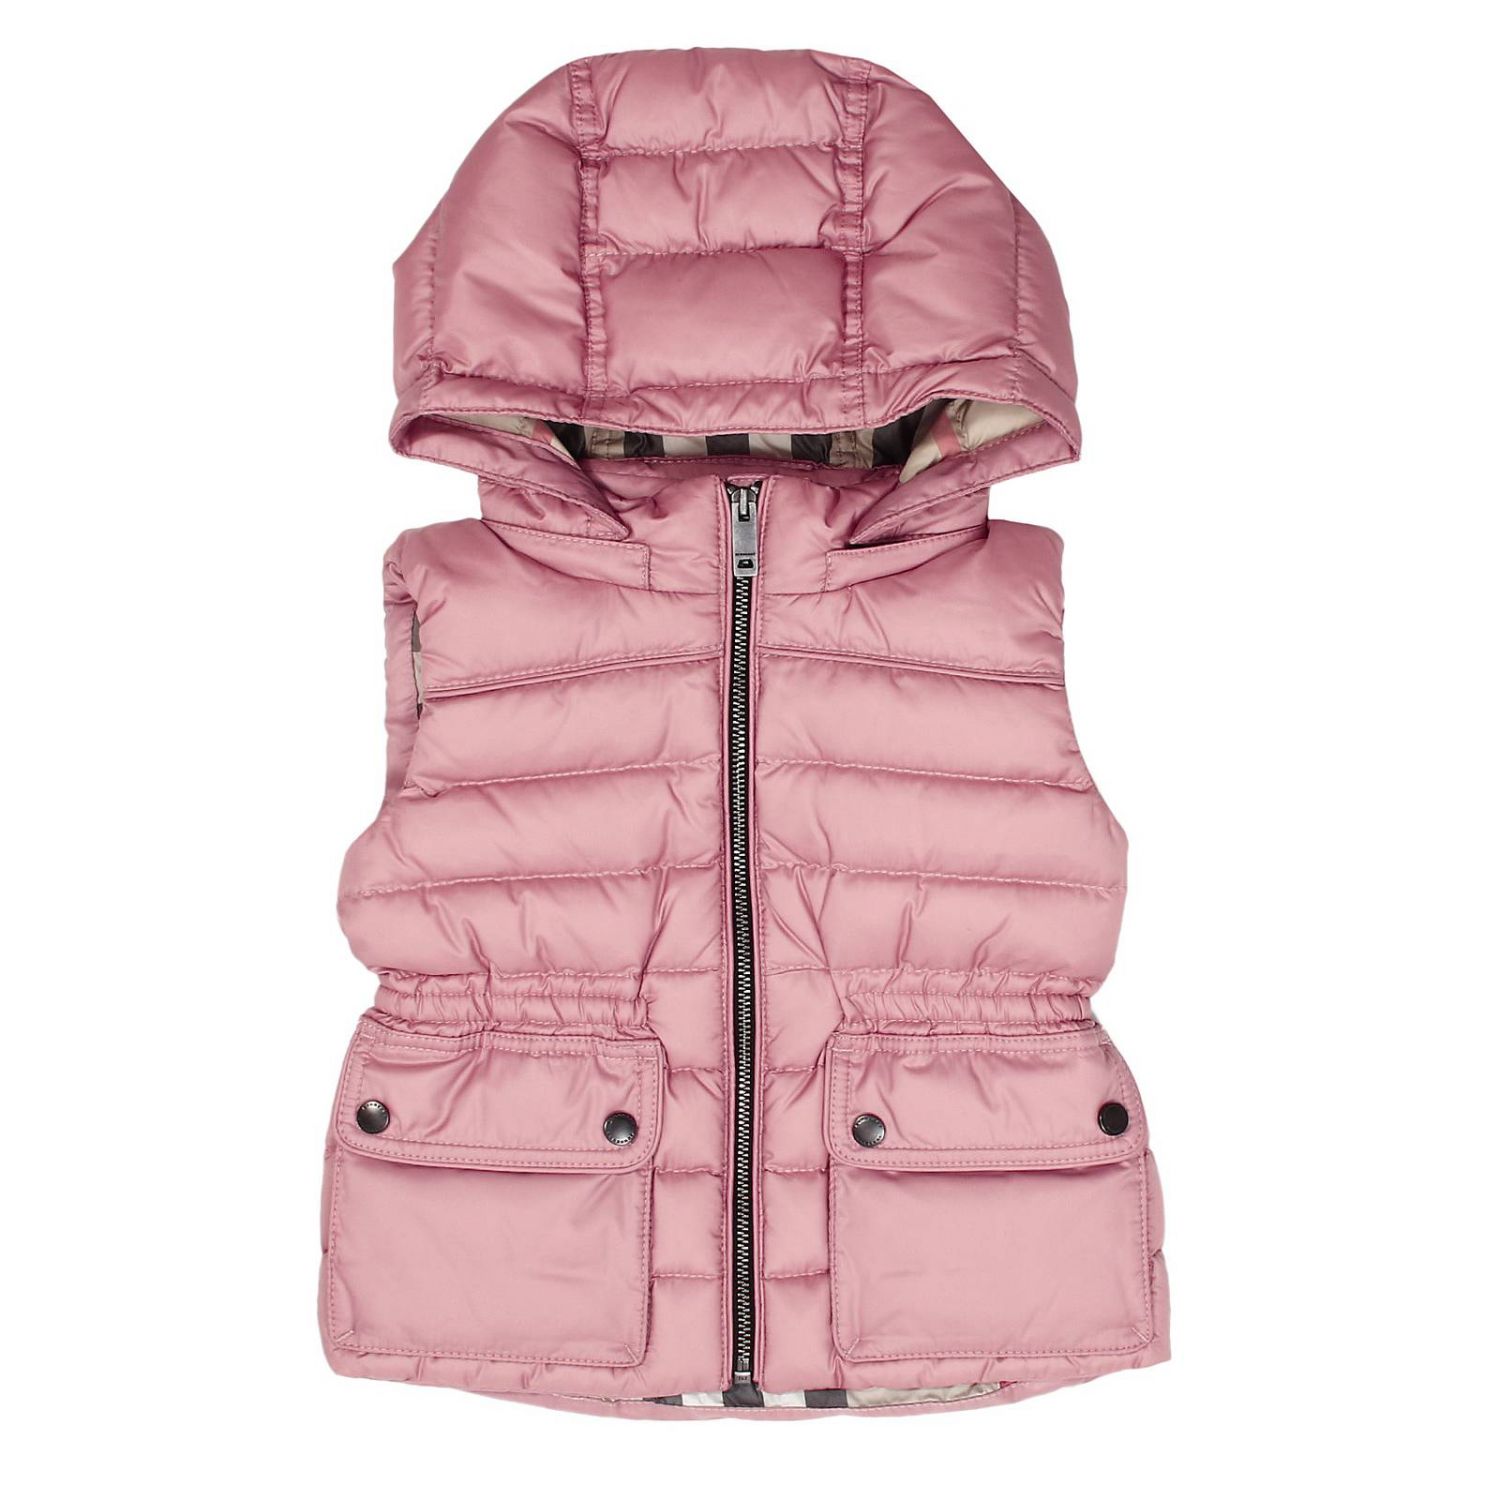 burberry vest pink